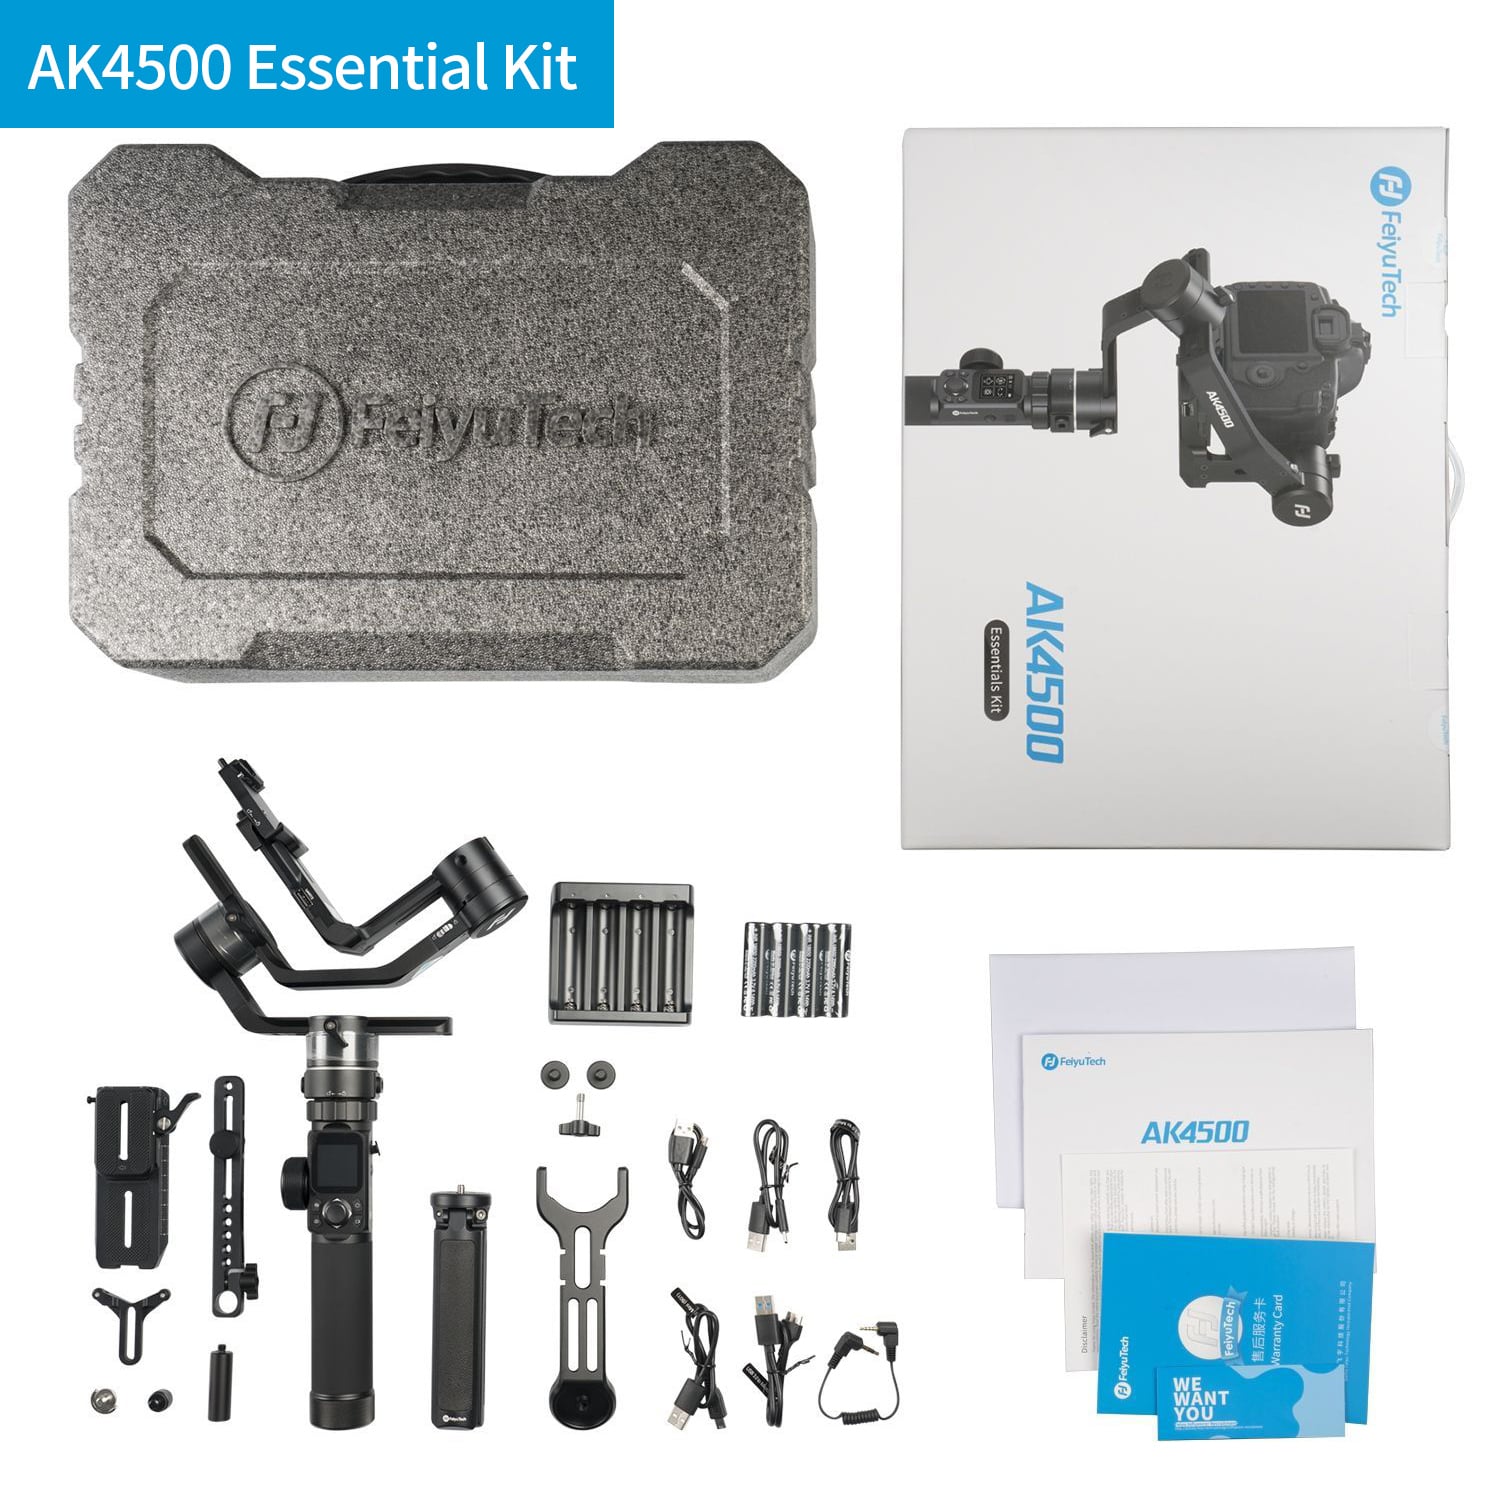 Feiyu AK4500's essential kit